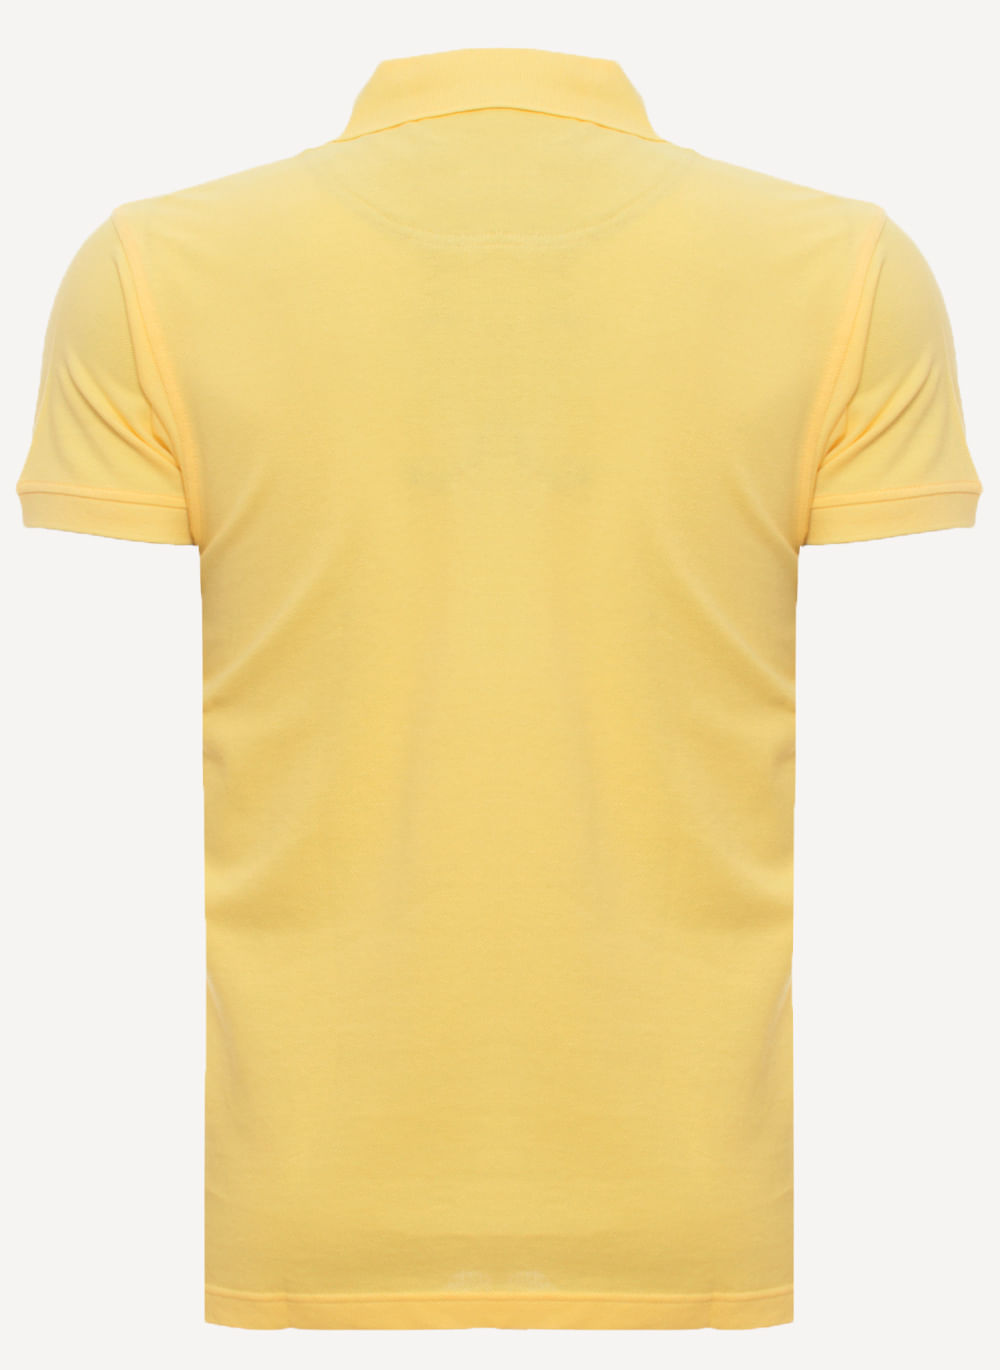 Camisa-Polo-Amarela-Lisa-Aleatory-Amarelo-M